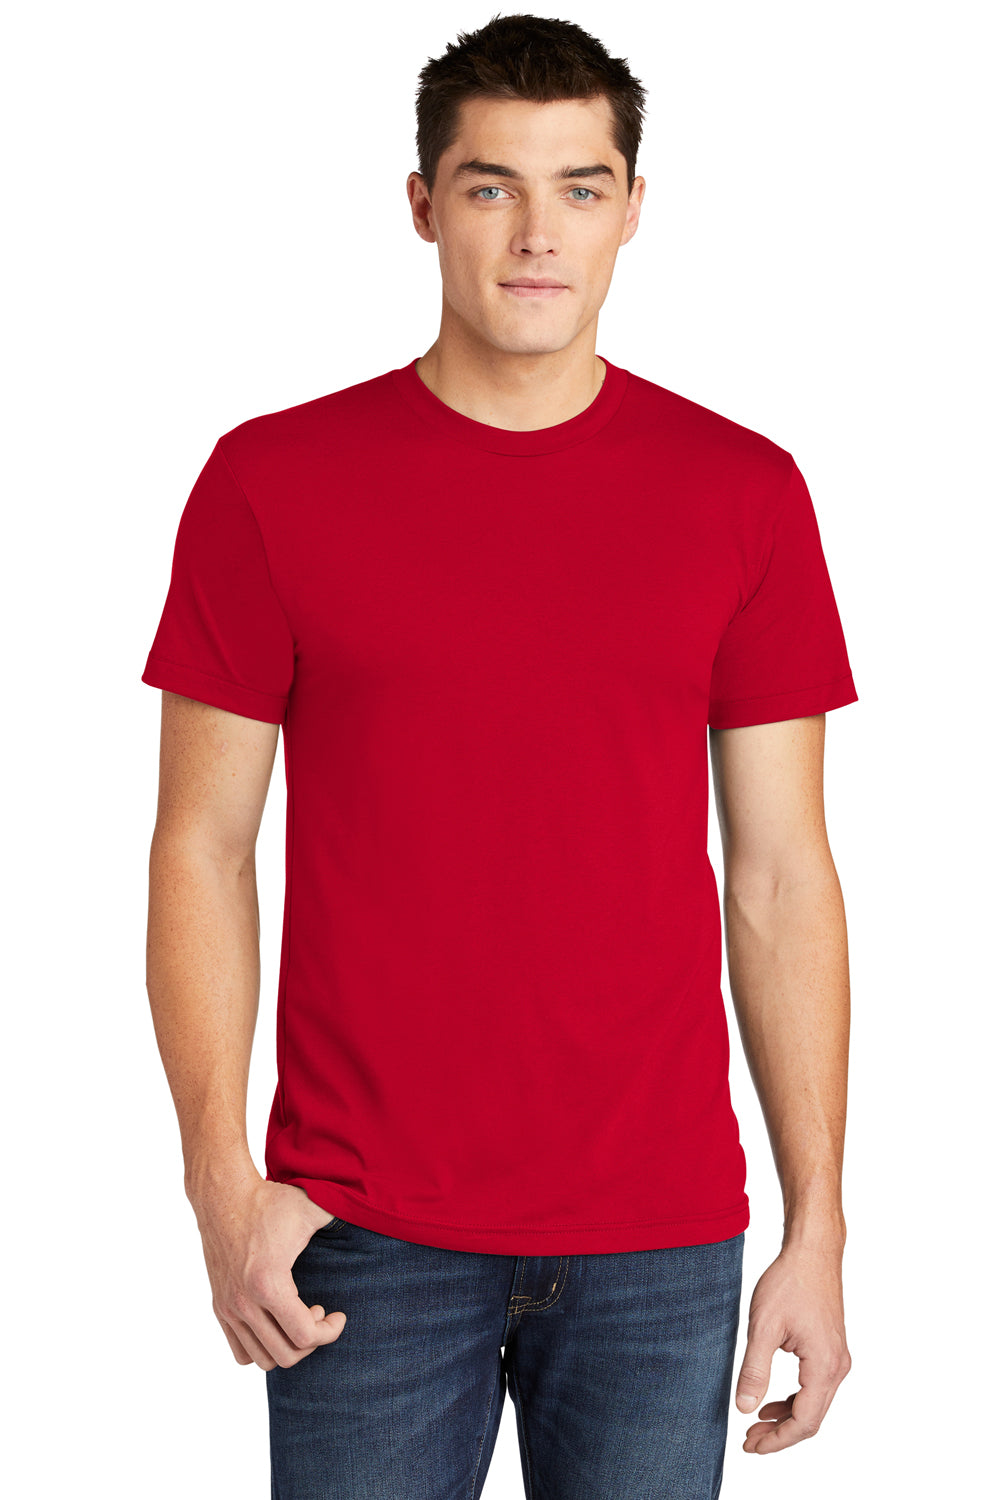 American Apparel BB401W Mens Short Sleeve Crewneck T-Shirt Red Front